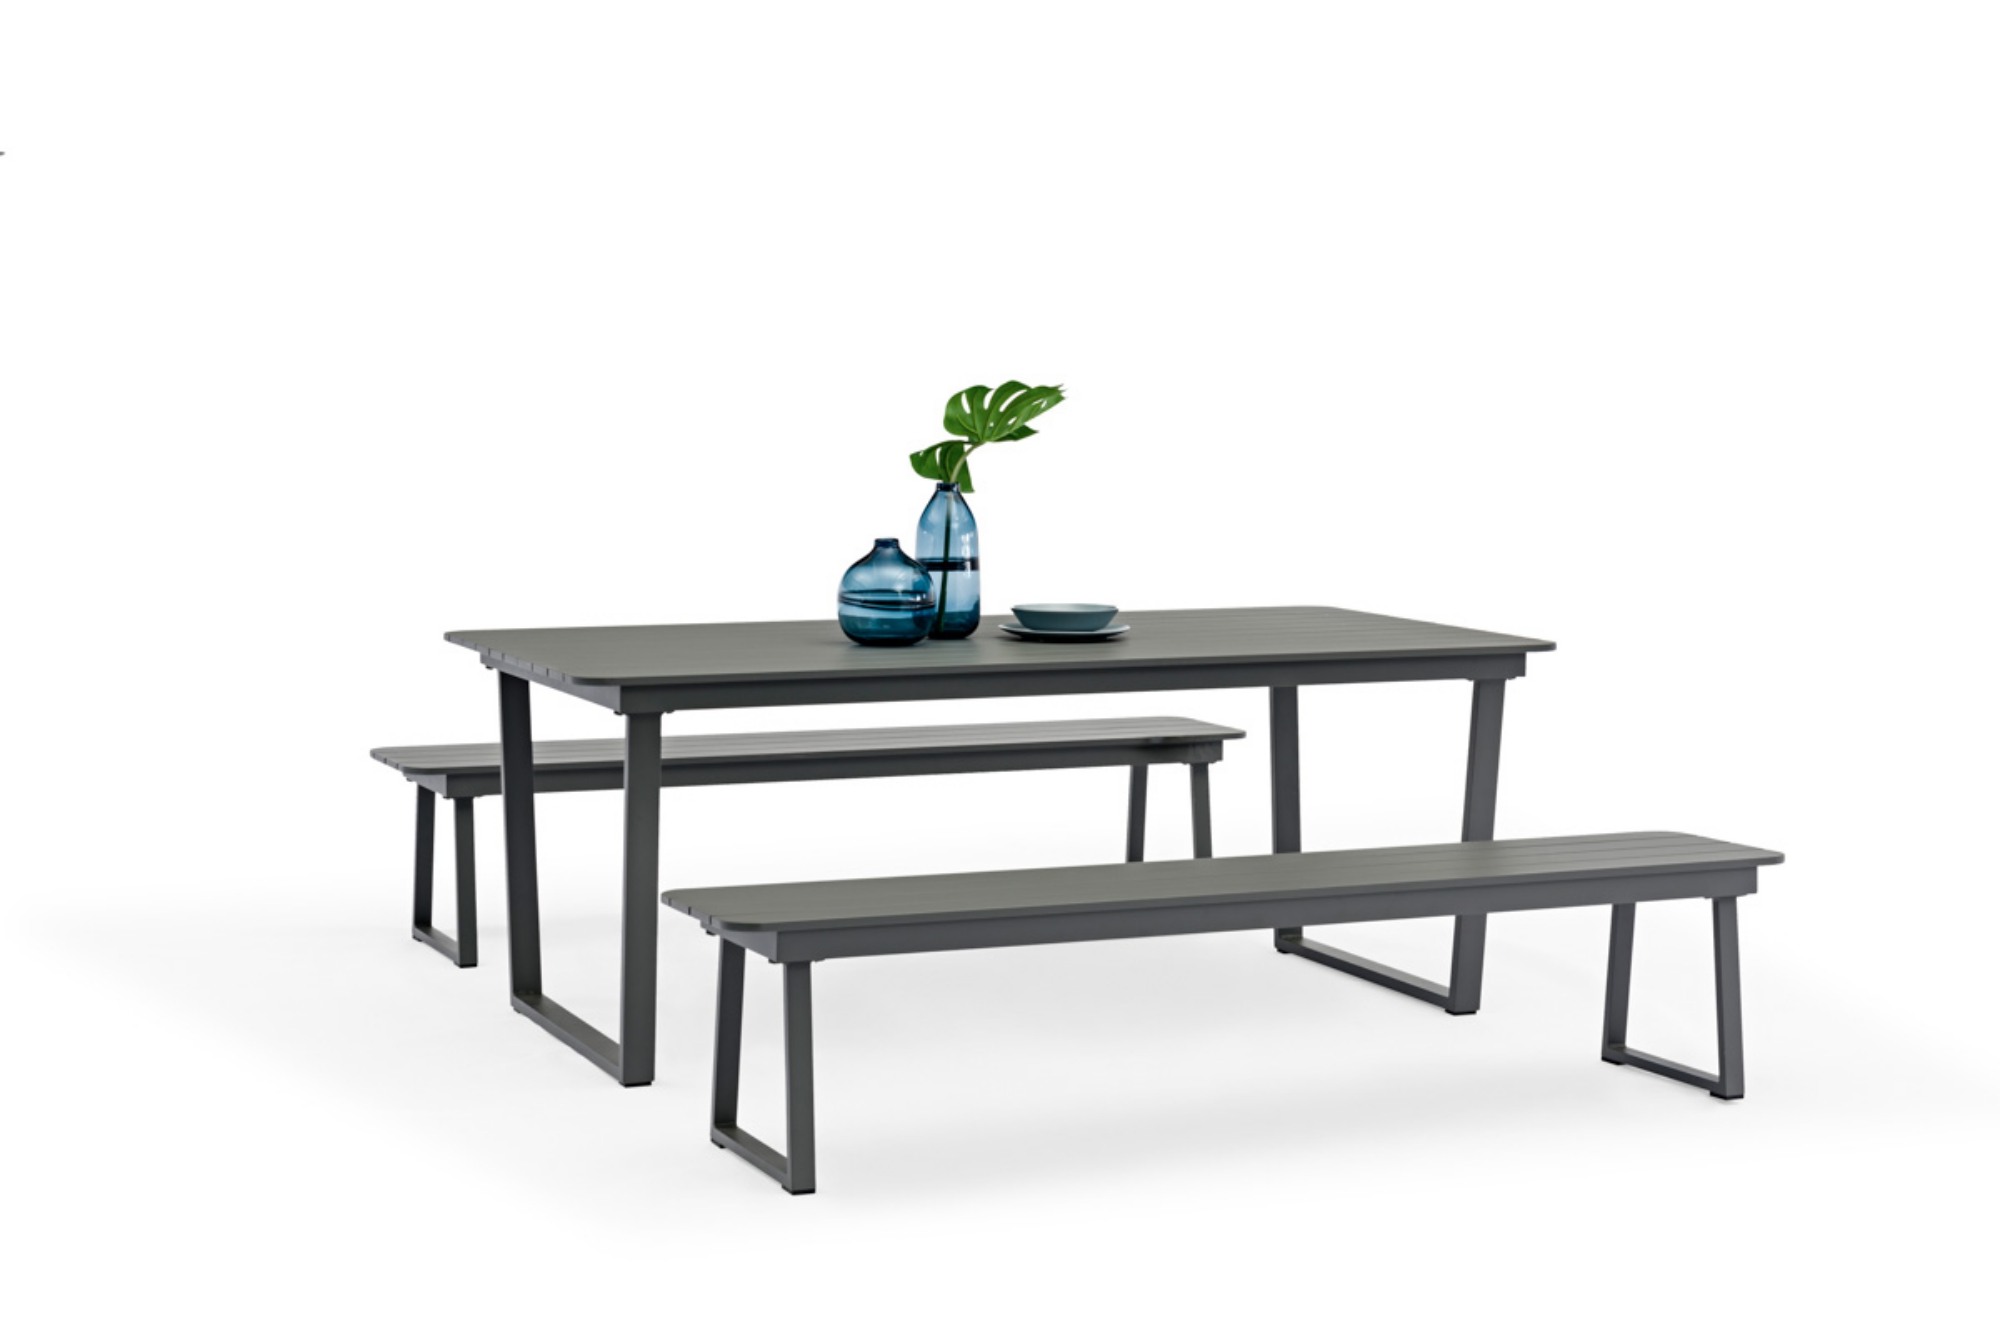 Super Purchasing for	Outdoor Dining Furniture	- Outdoor Furniture Manufacture HAGEN Full Alum. Dining Set – Jacrea